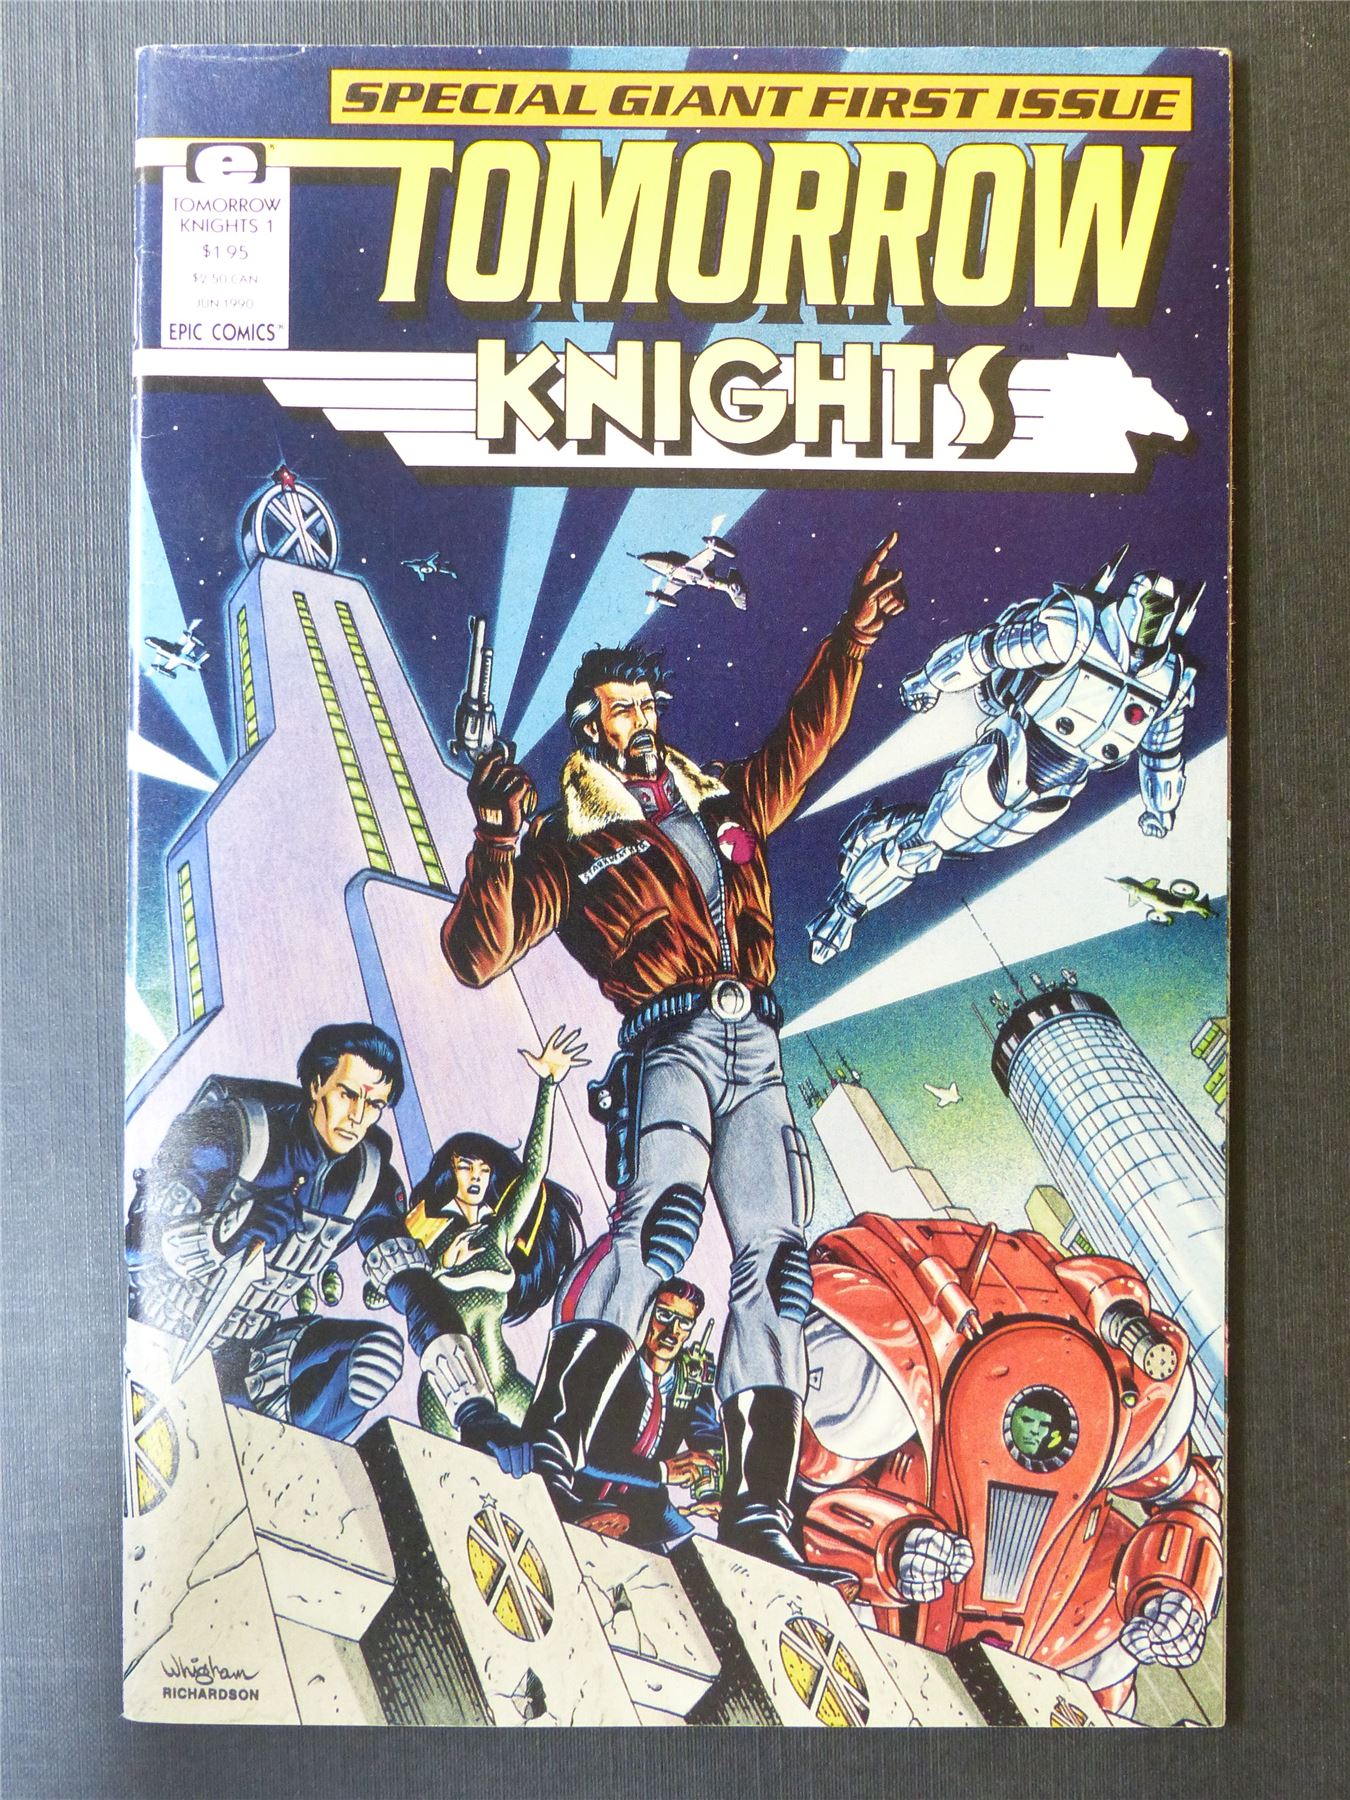 TOMORROW Knights #1 - Epic Comics #2JK